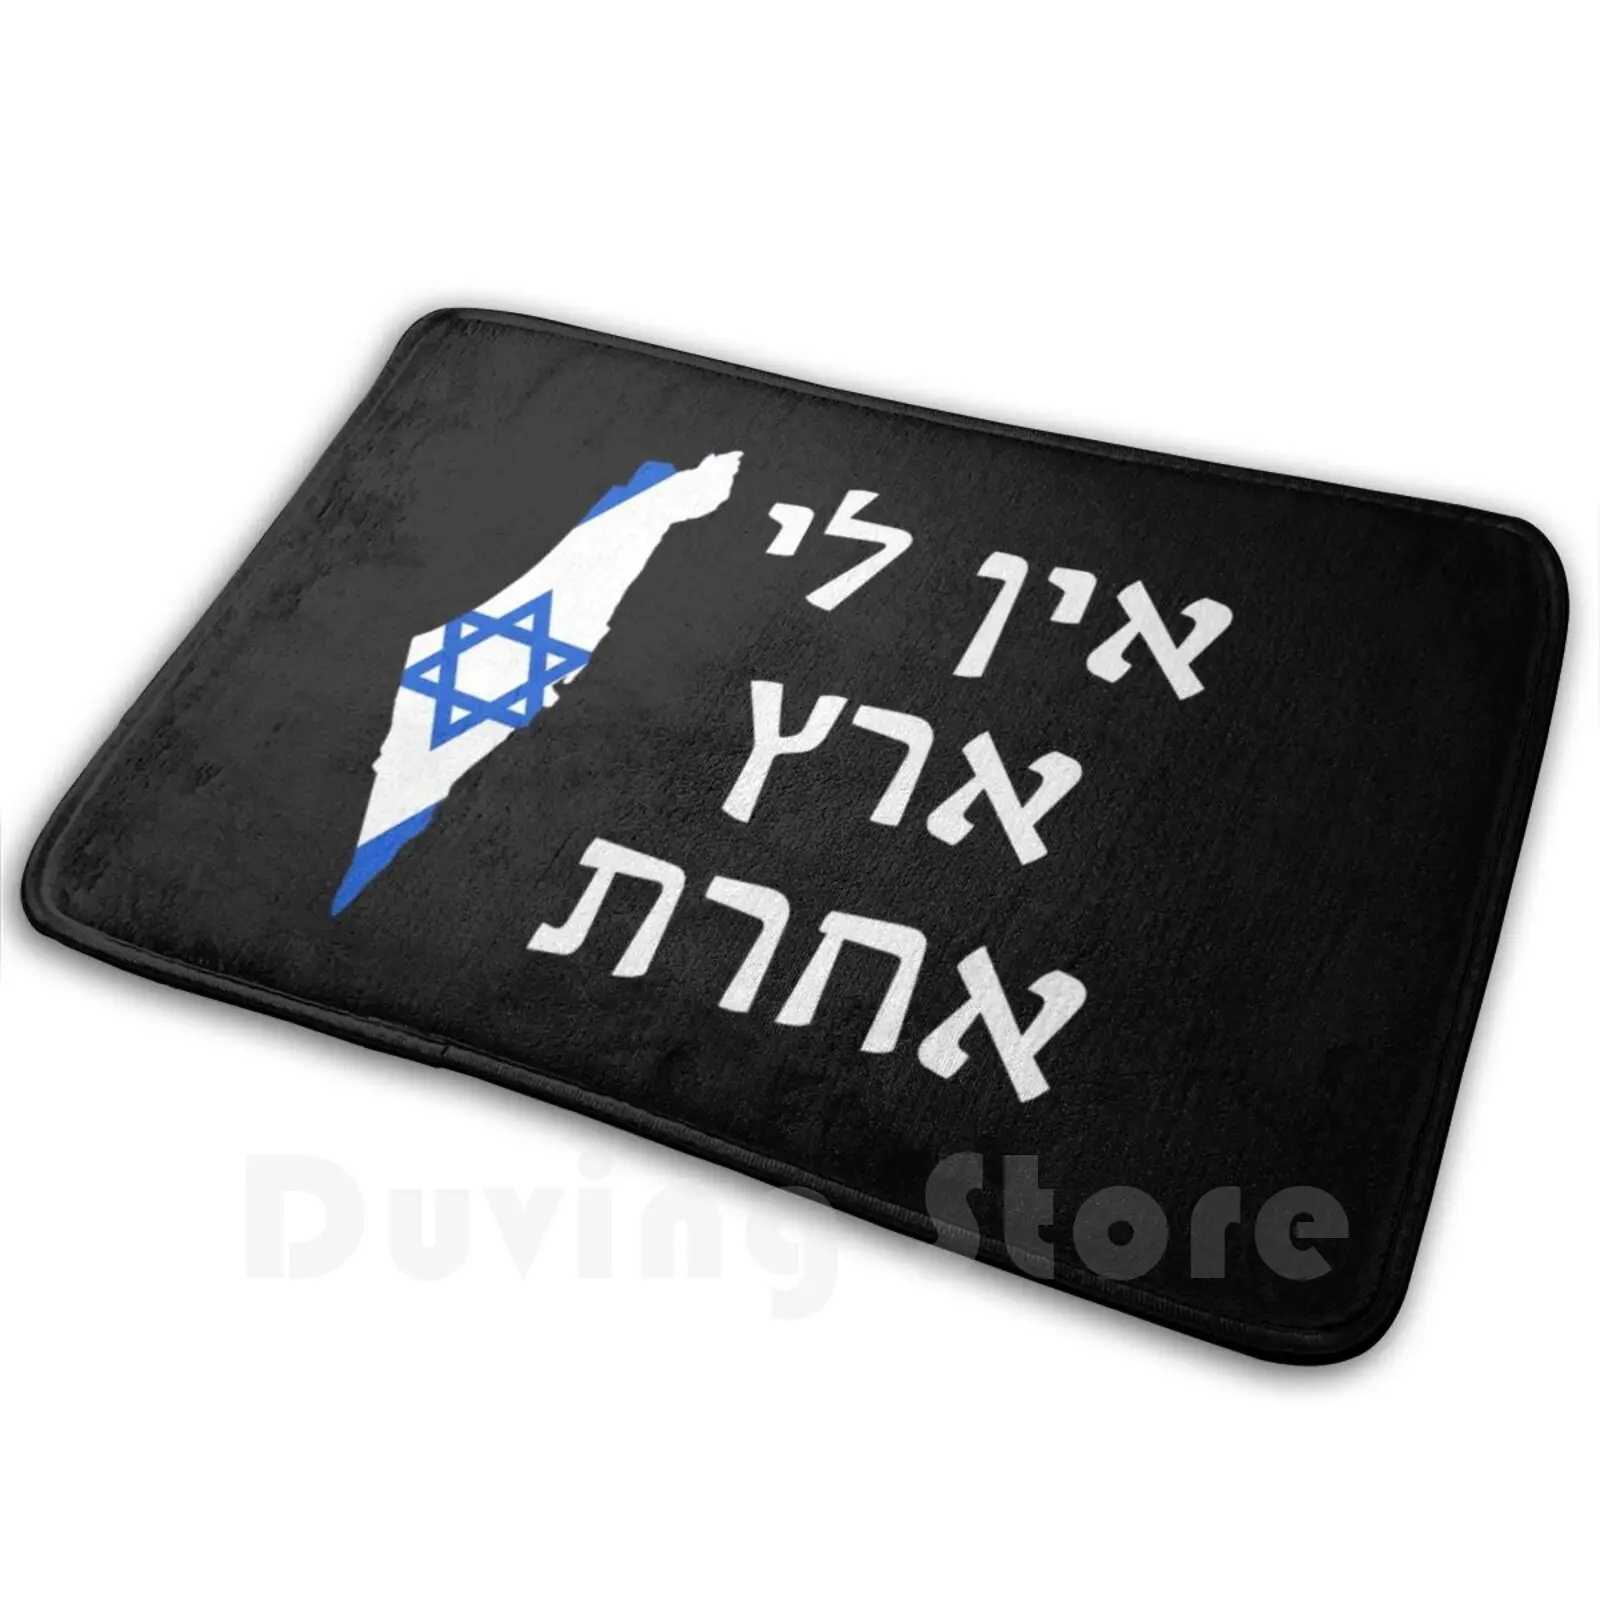 

Ein Li Eretz Acheret - I Have No Other Land Mat Rug Carpet Anti-Slip Floor Mats Bedroom Israel Israel Jerusalem Judaism Jewish